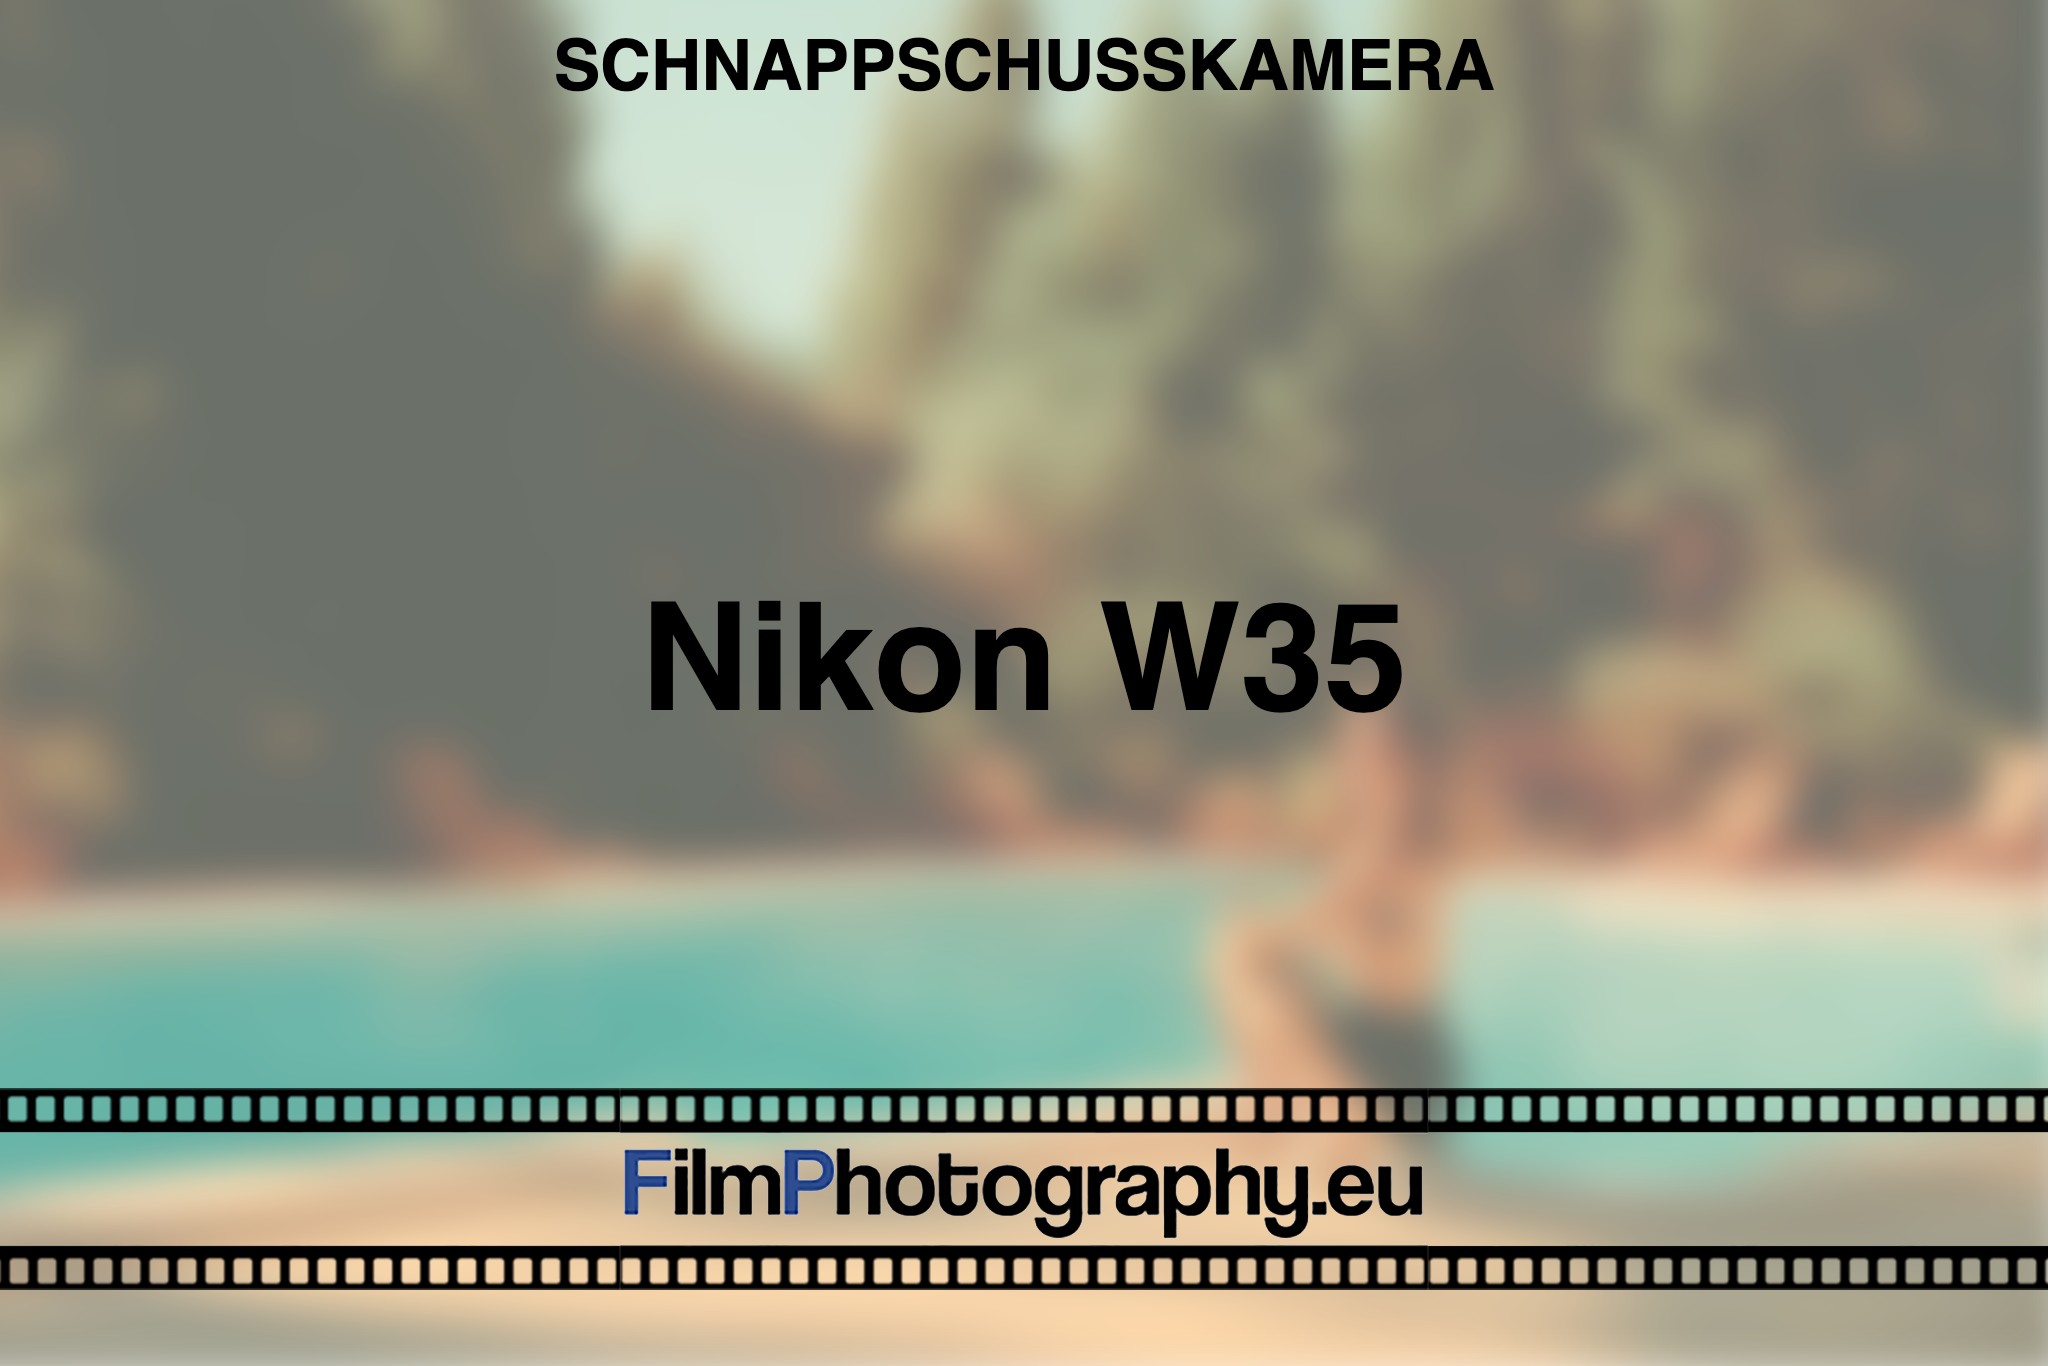 nikon-w35-schnappschusskamera-bnv